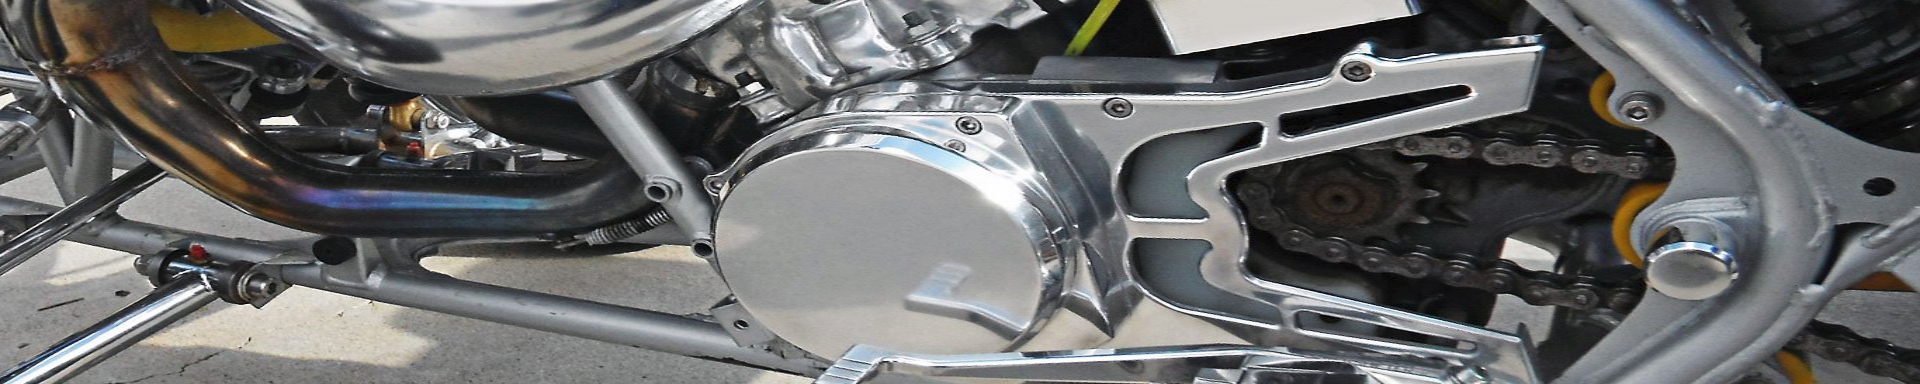 Engine & Transmission Custom Covers | MunroPowersports.com | Munro Industries mp-100803011905